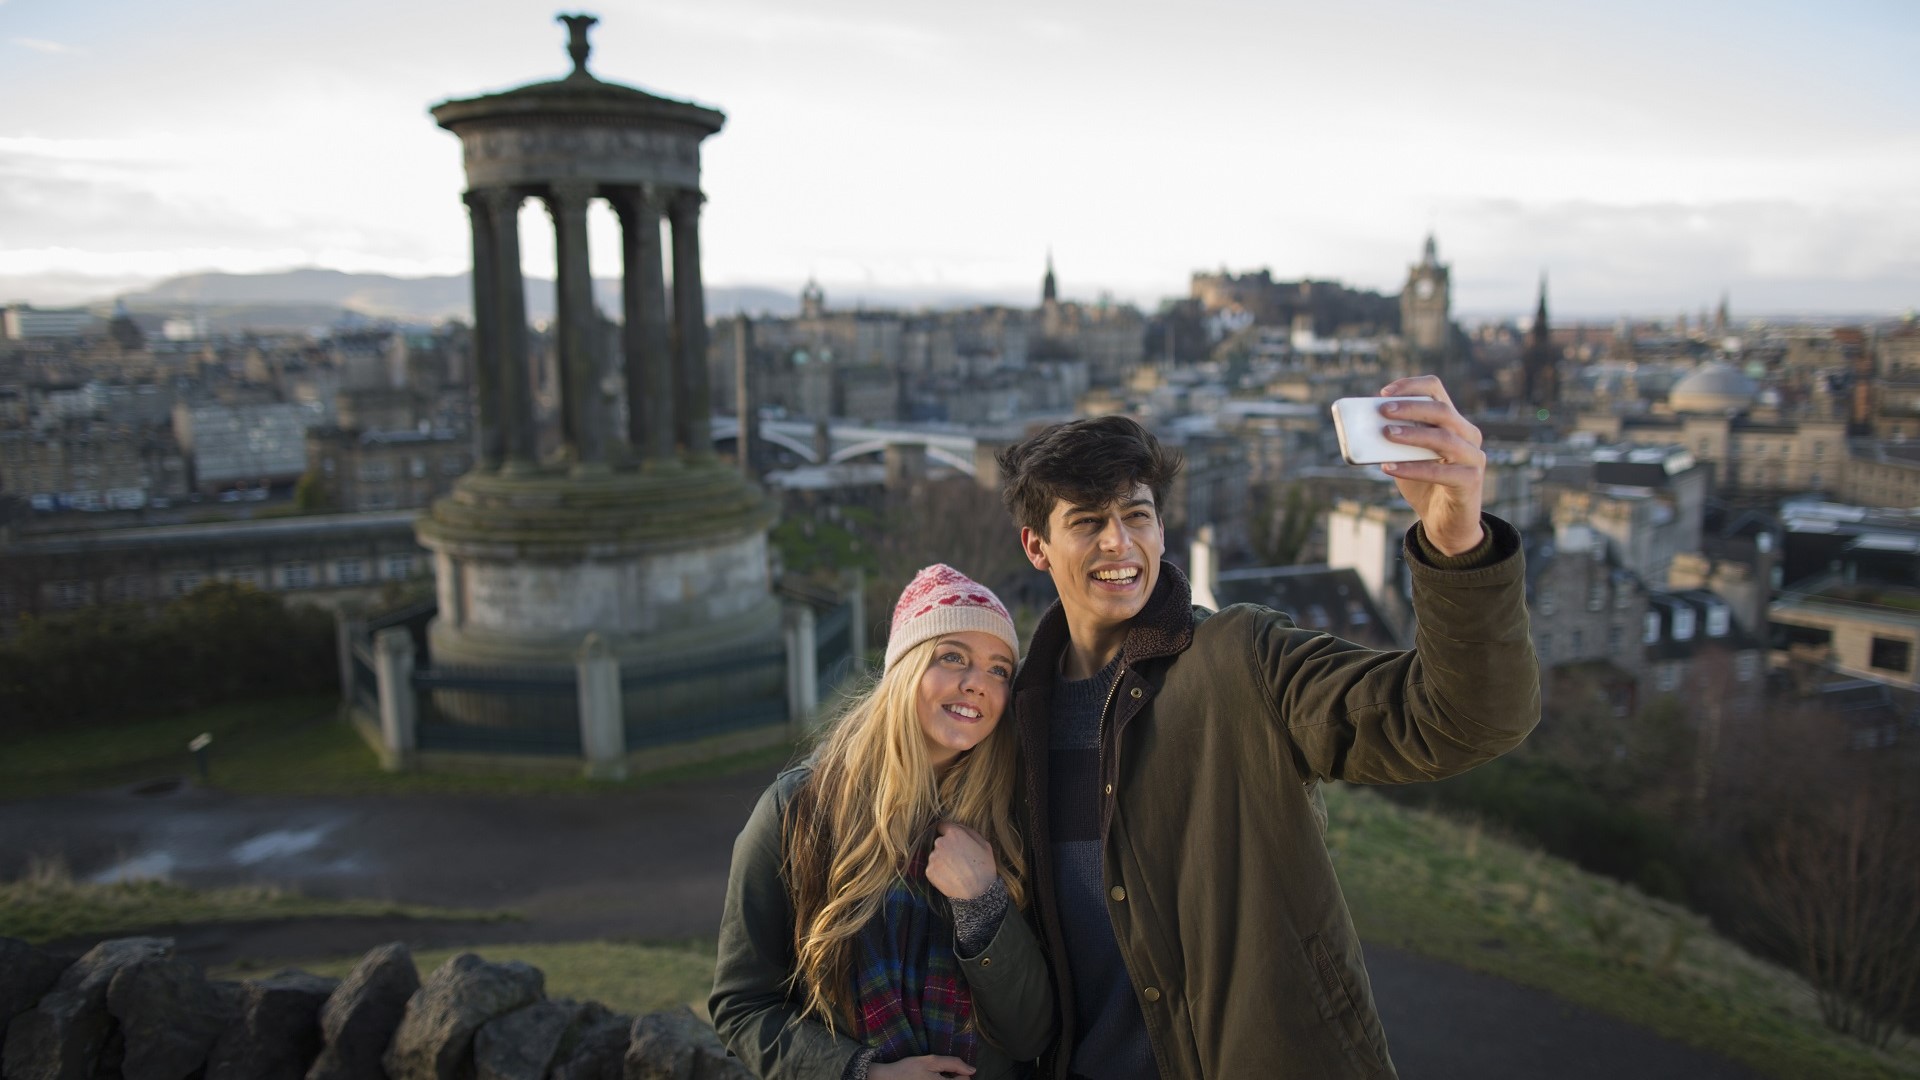 a smiling woman and man take a selfie on Calton Hill in Edinburgh, Scotland